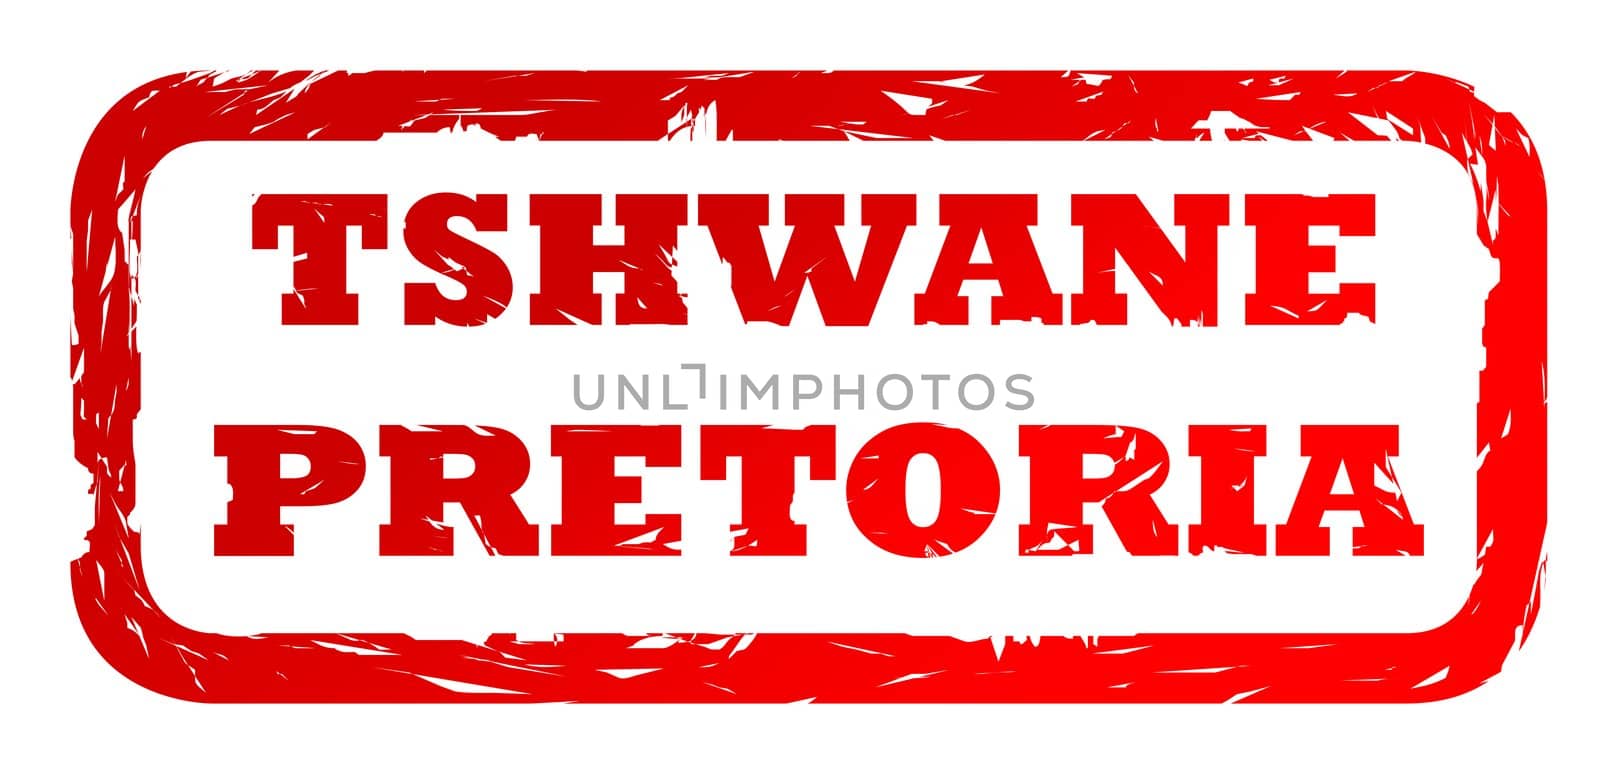 Used Tshwane Pretoria city stamp by speedfighter